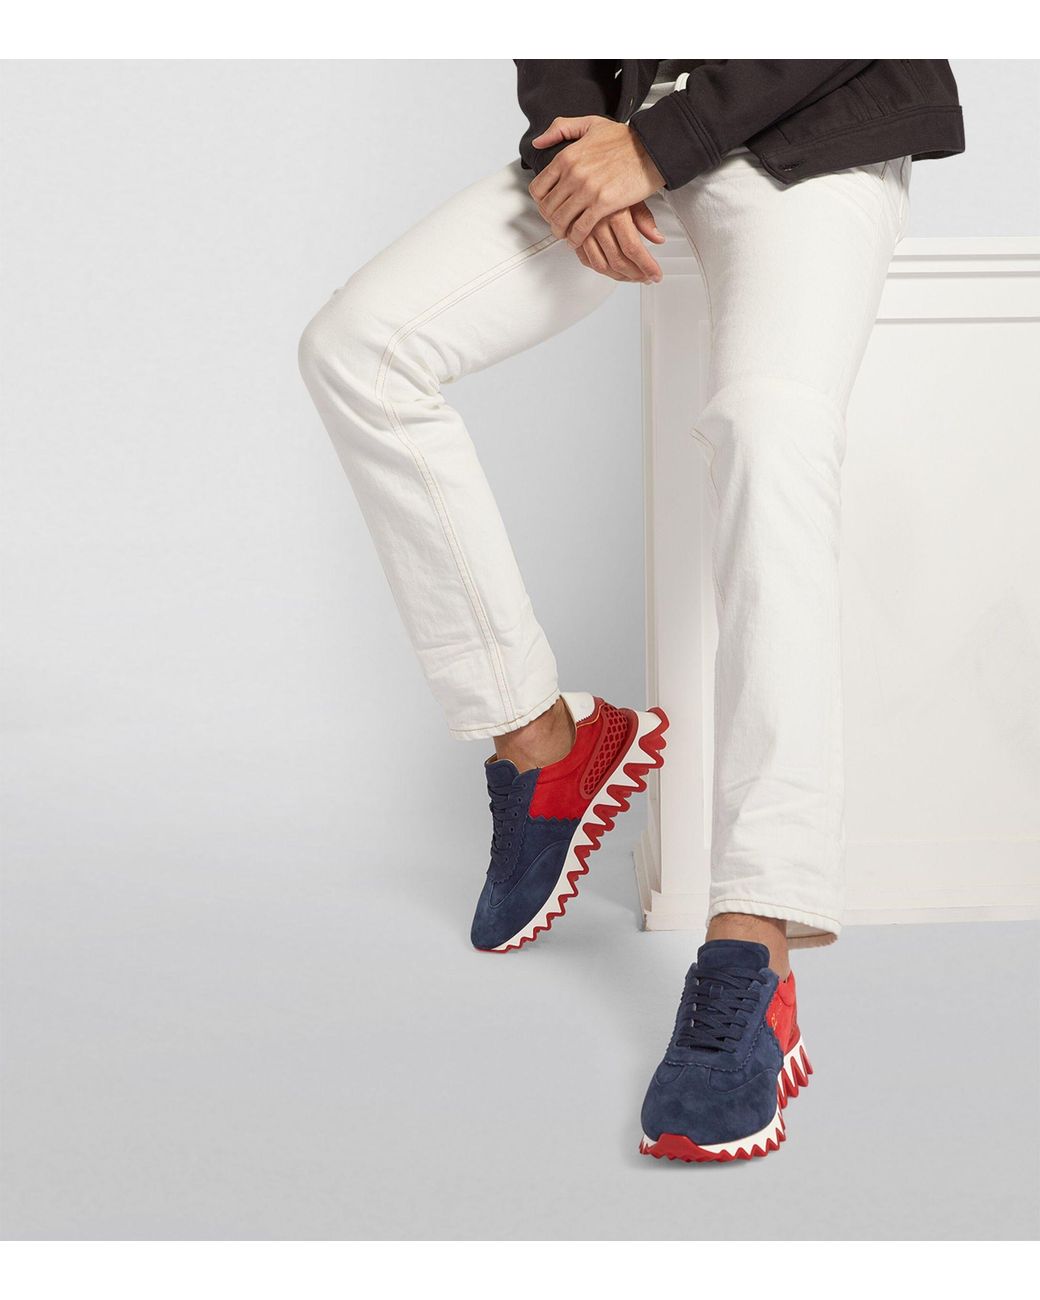 Christian Louboutin Loubishark Suede Sneakers in Blue for Men